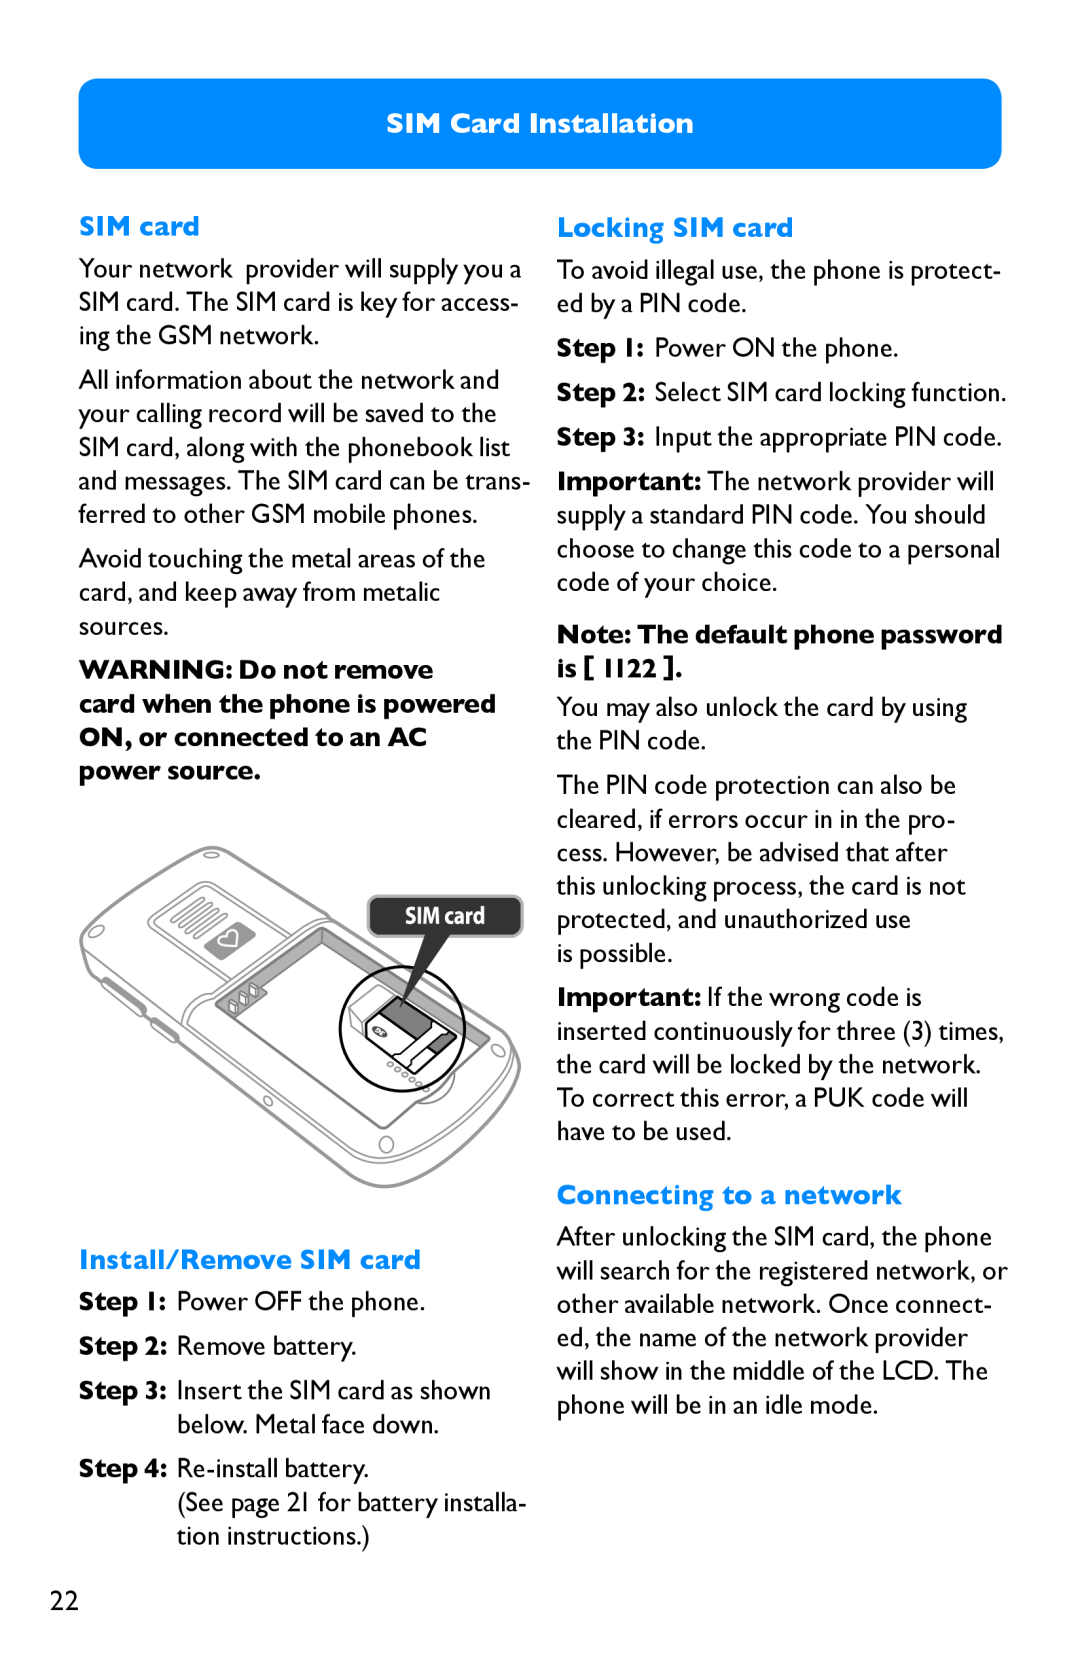 Clarity Pal manual SIM Card Installation, Install/Remove SIM card, Locking SIM card, Connecting to a network 